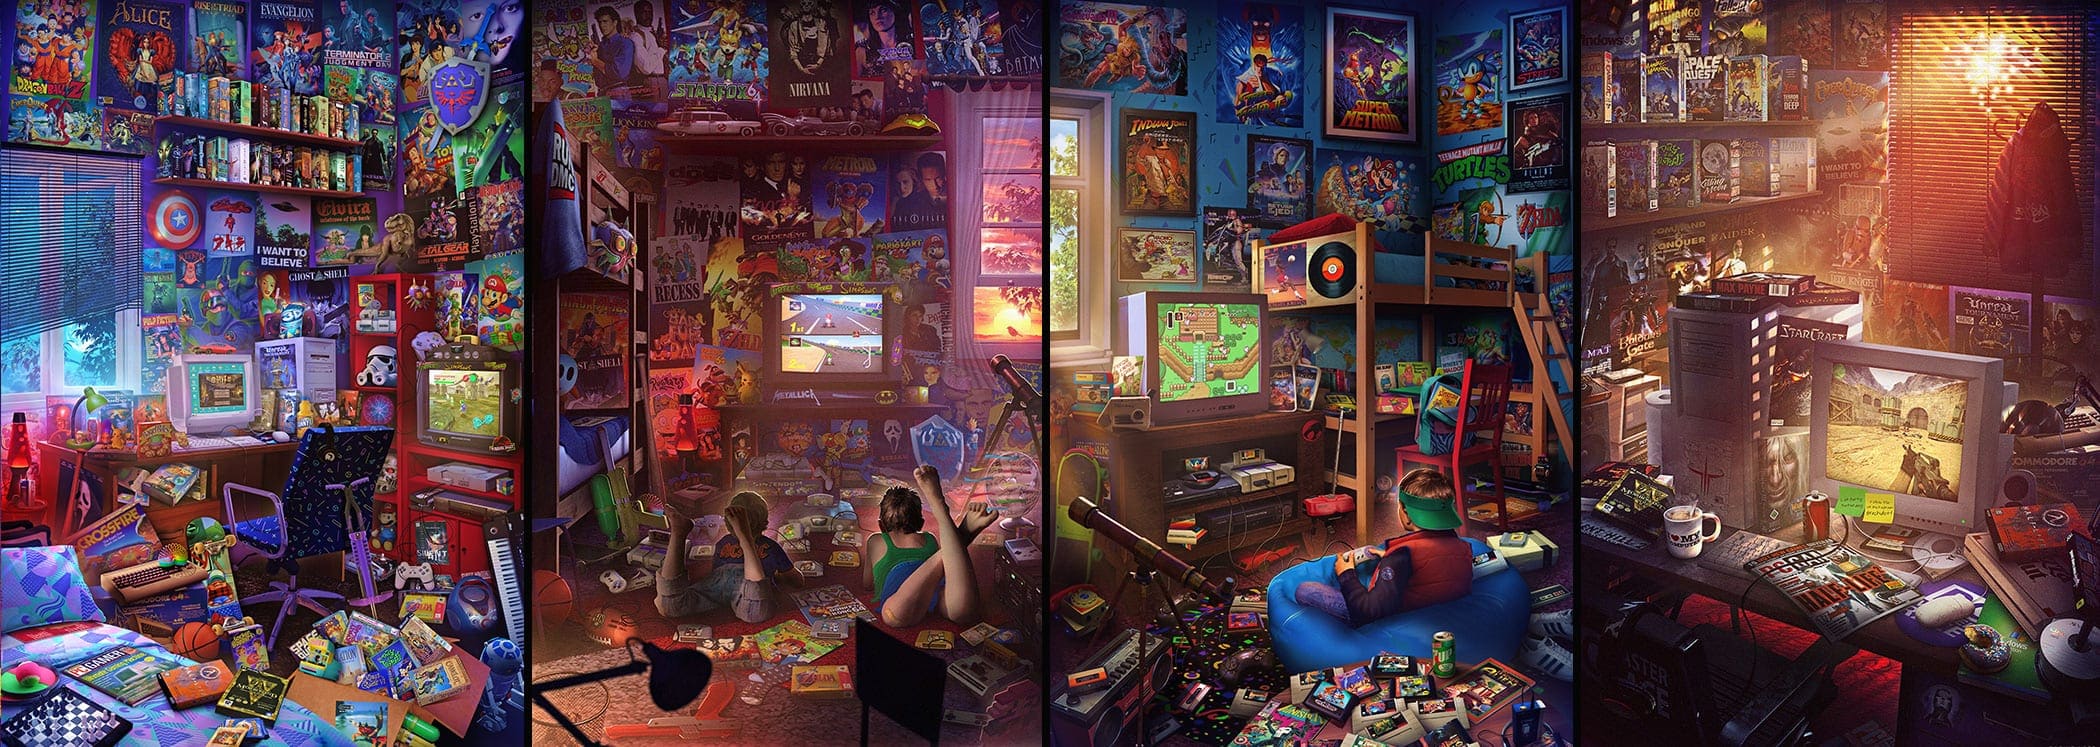 This Retro Gamer Bedroom Art Will Make You Nostalgic